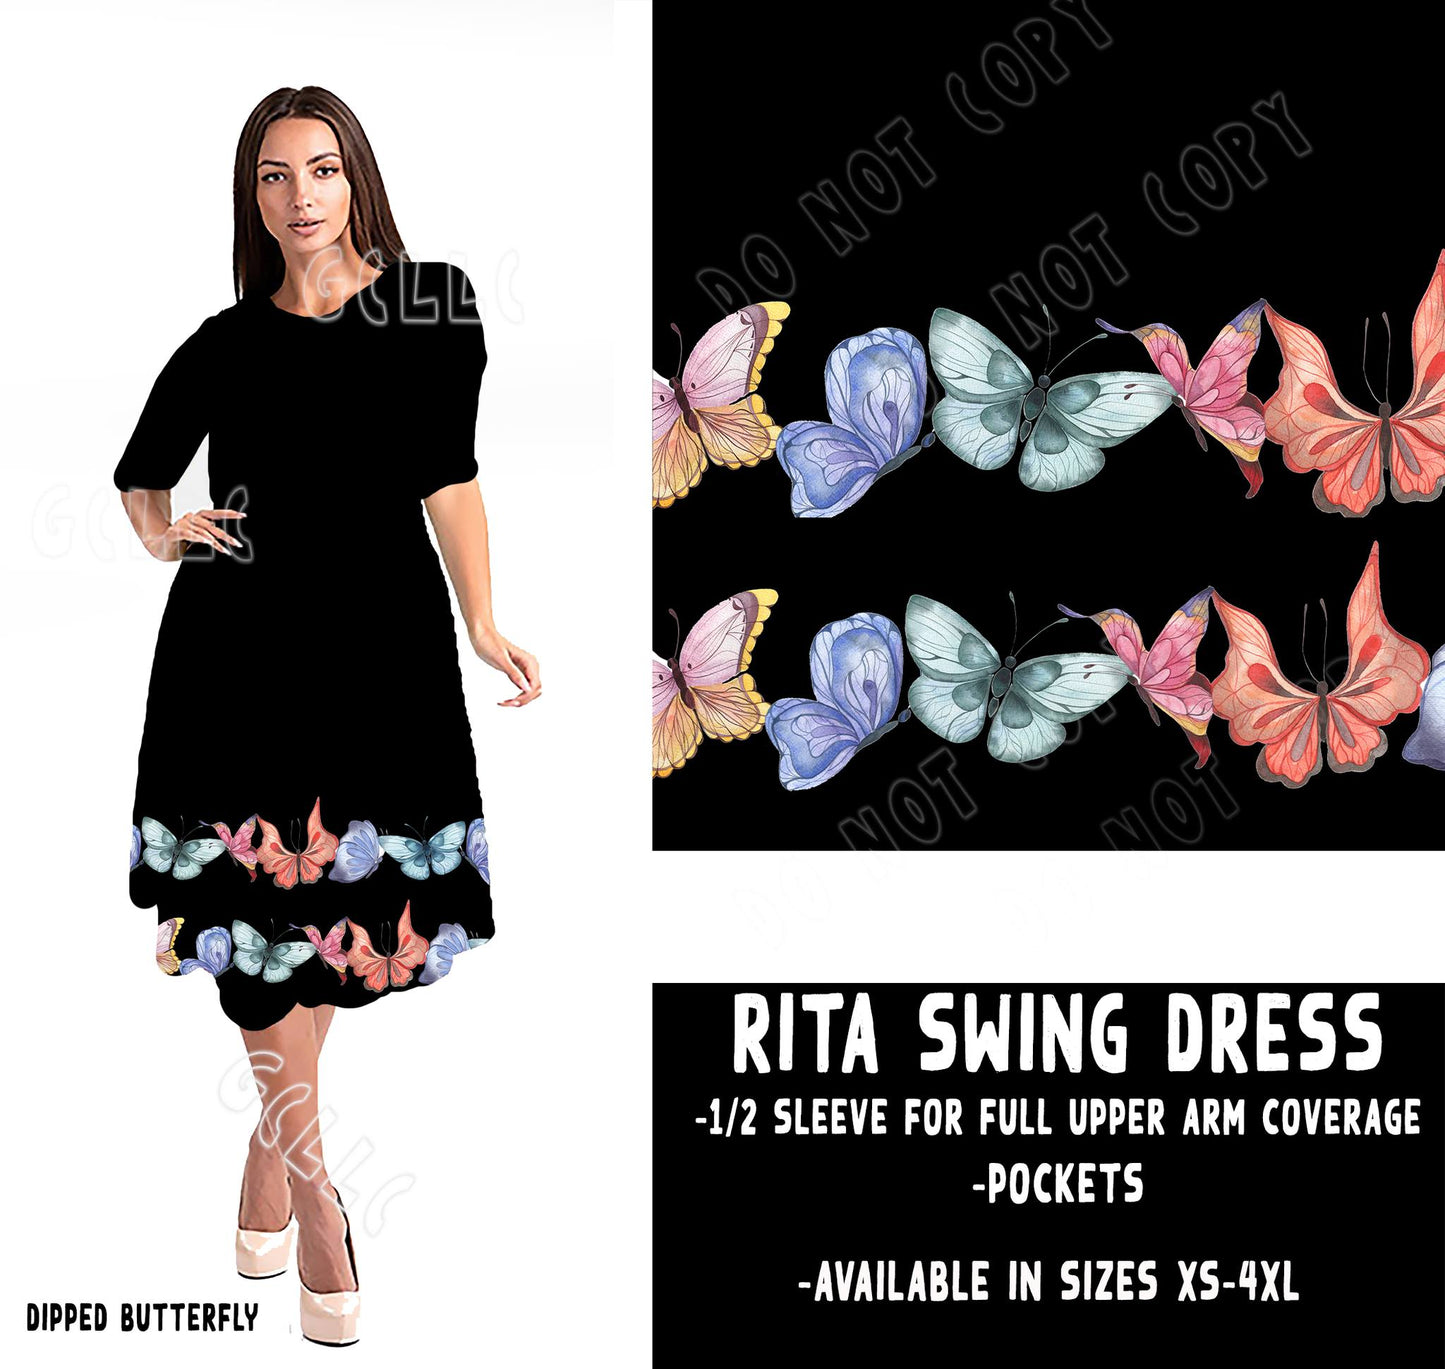 RITA SWING DRESS RUN-DIPPED BUTTERFLY - Alonna's Legging Land